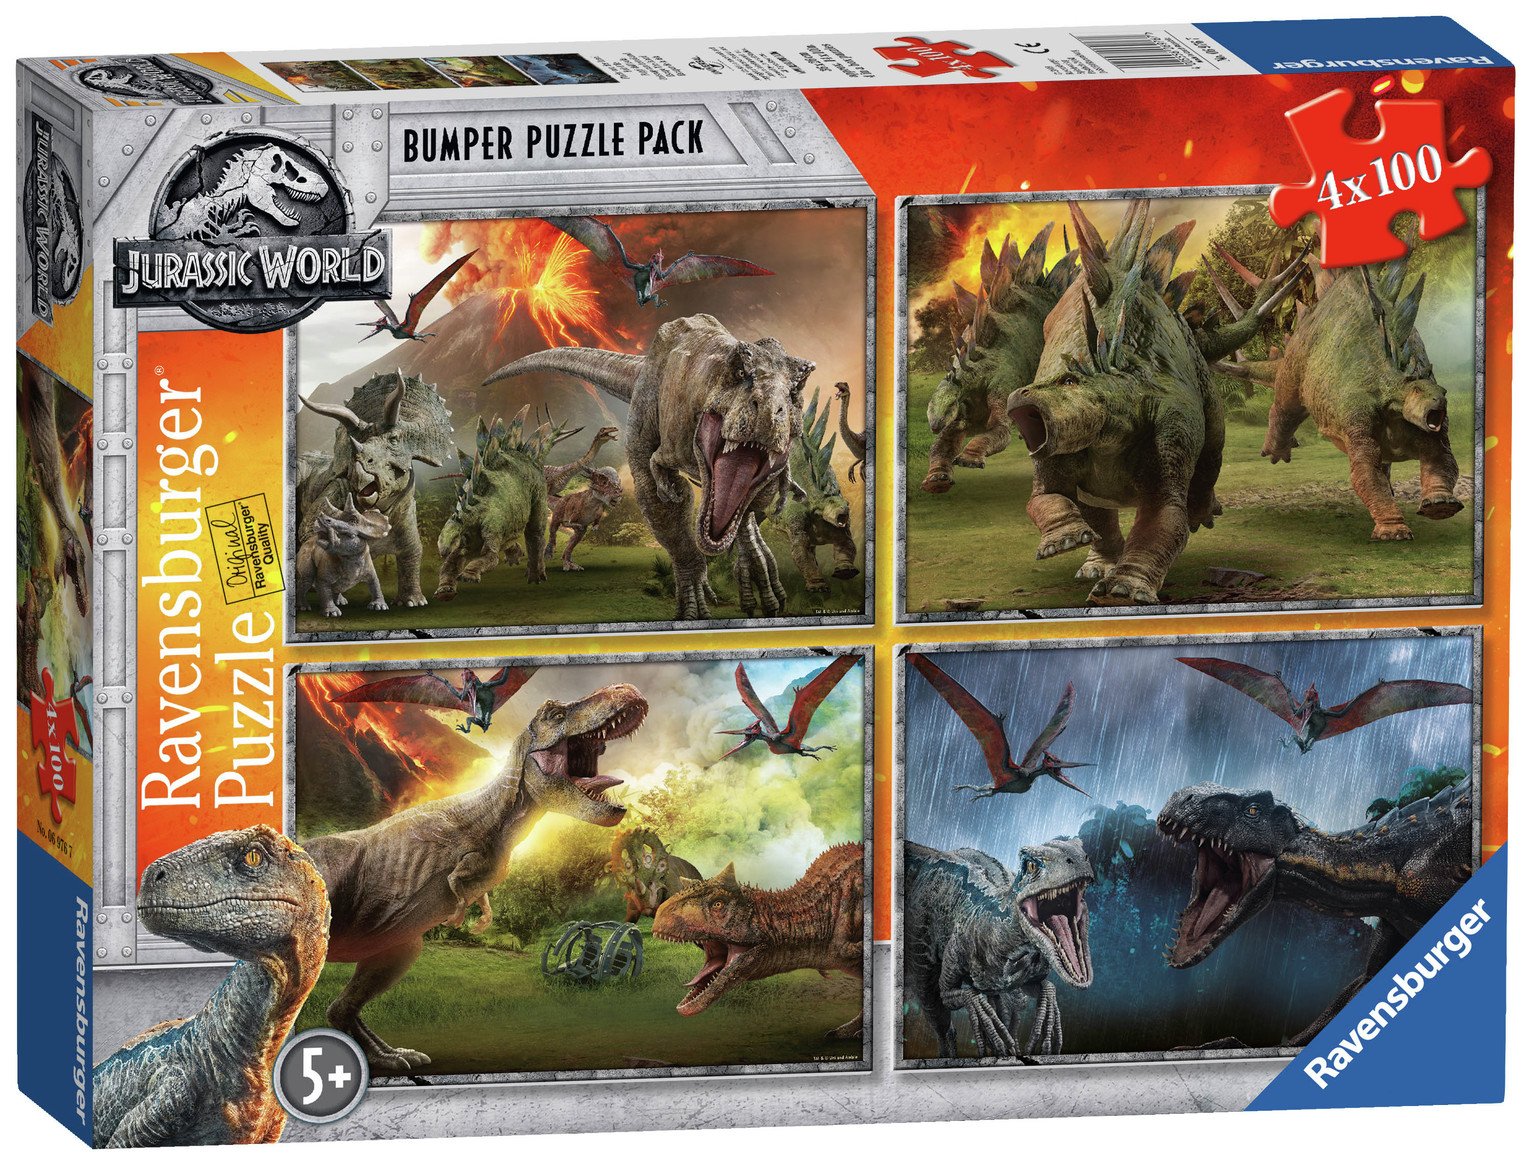 Ravensburger Jurassic World 4 x 100 Piece Puzzles